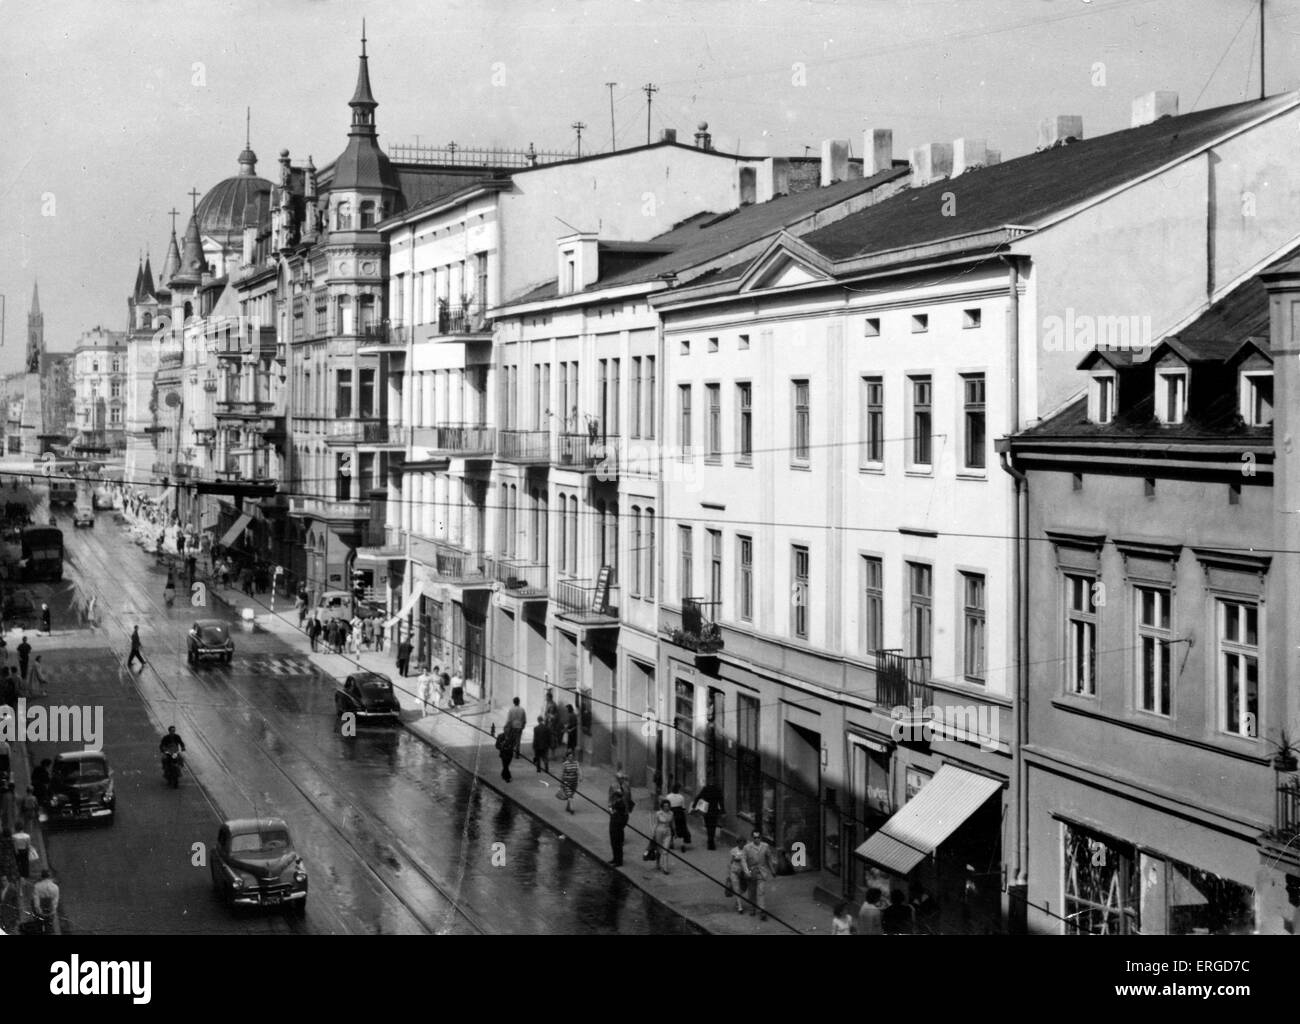 Parte di Piotrkowskiej Street, Łódź, Polonia. Mostra vetture, passanti e vari edifici. 1930s (?) Foto Stock